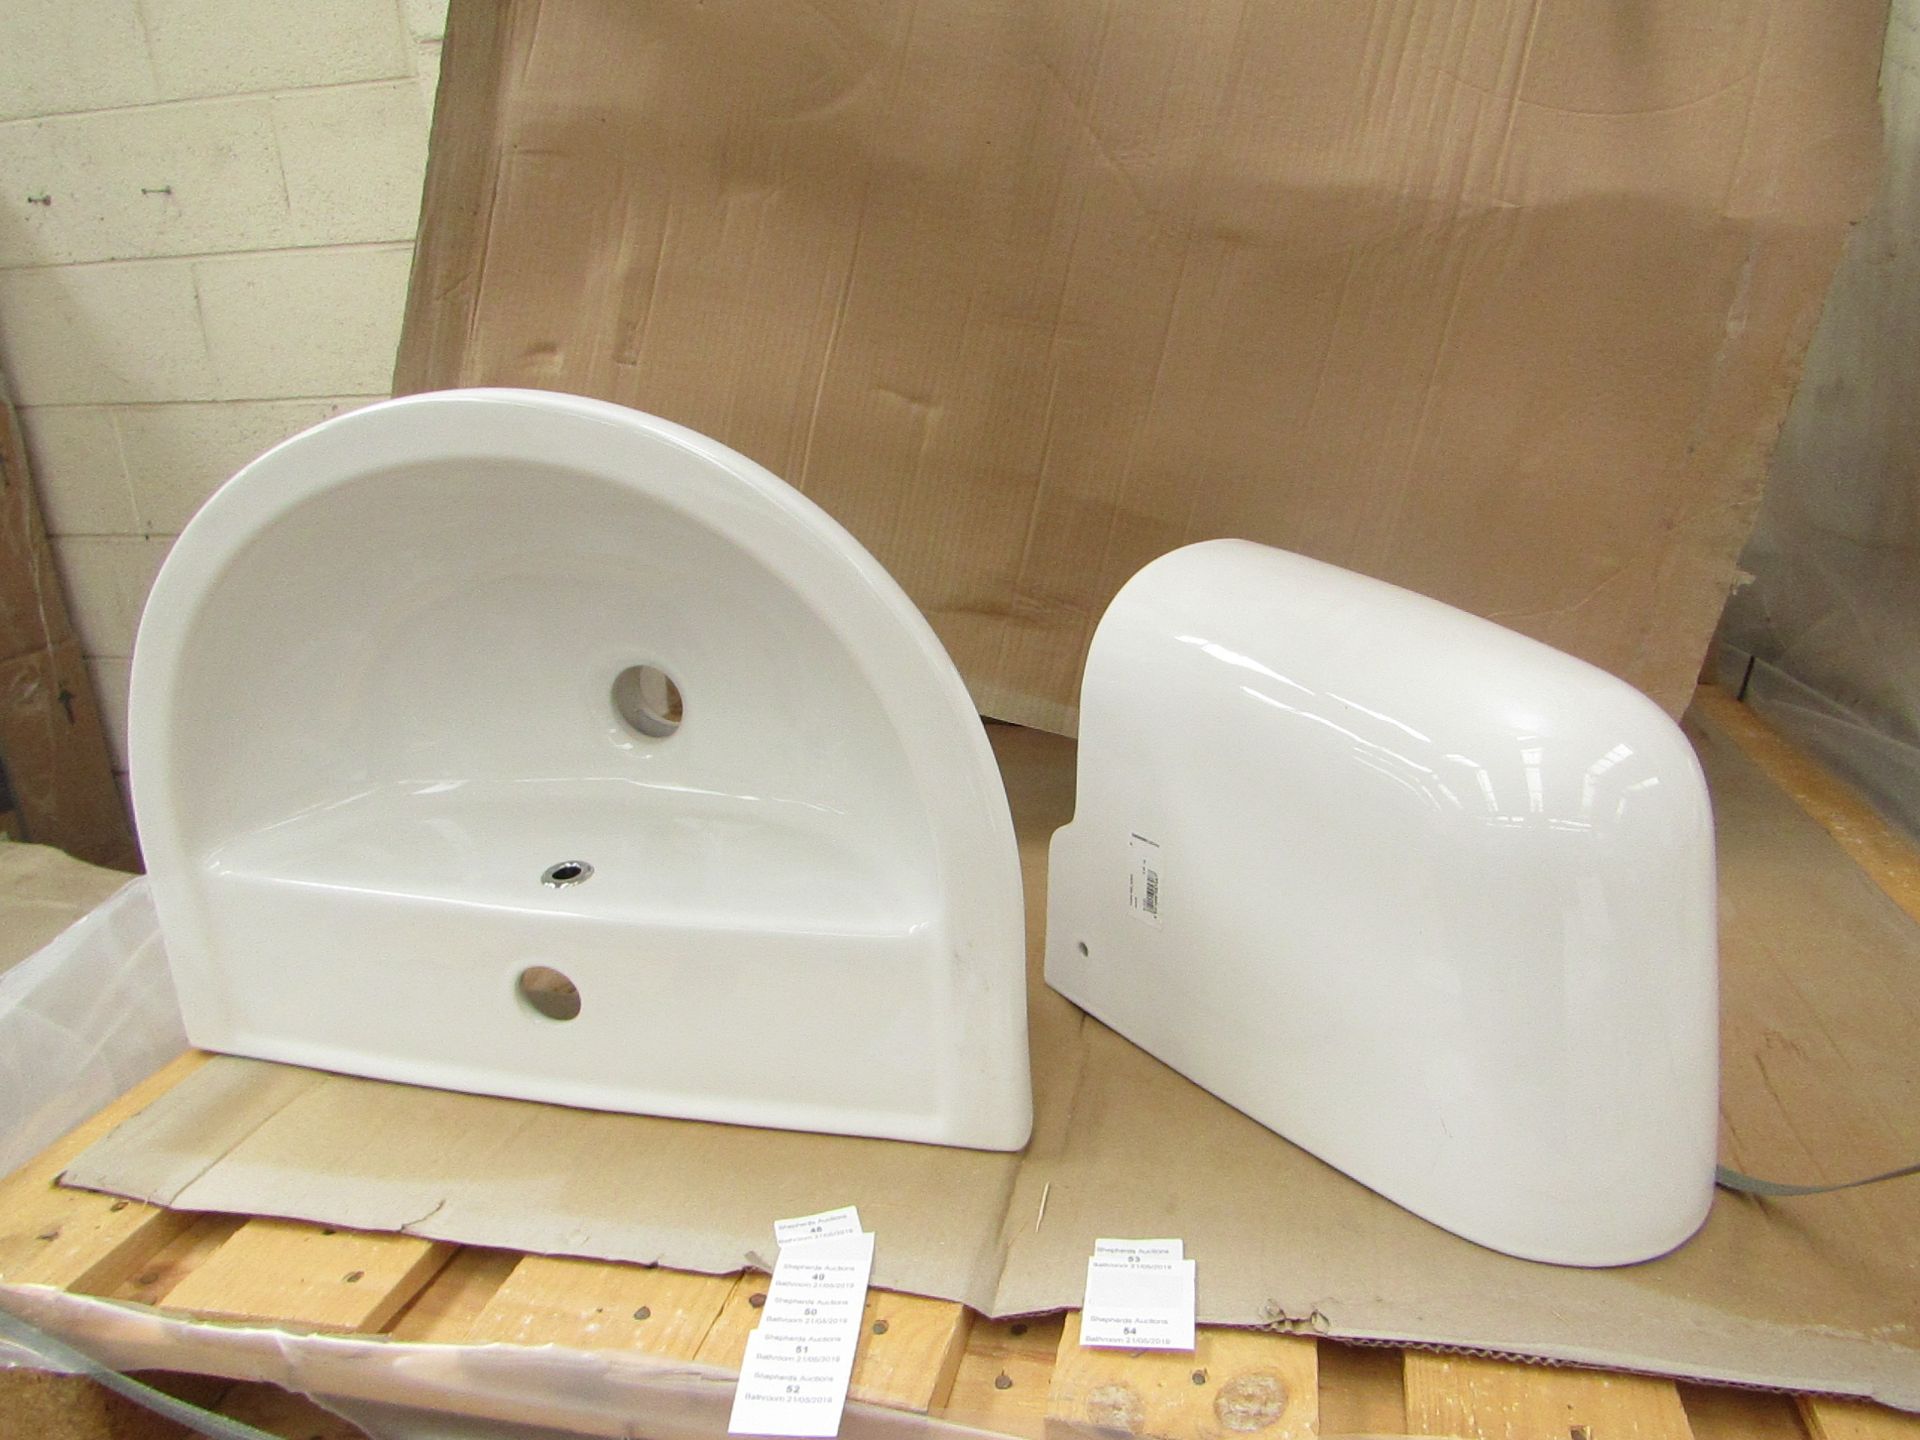 Lecico Remini 50cm 1 tap hole basin with Remini semi pedestal, unused and boxed